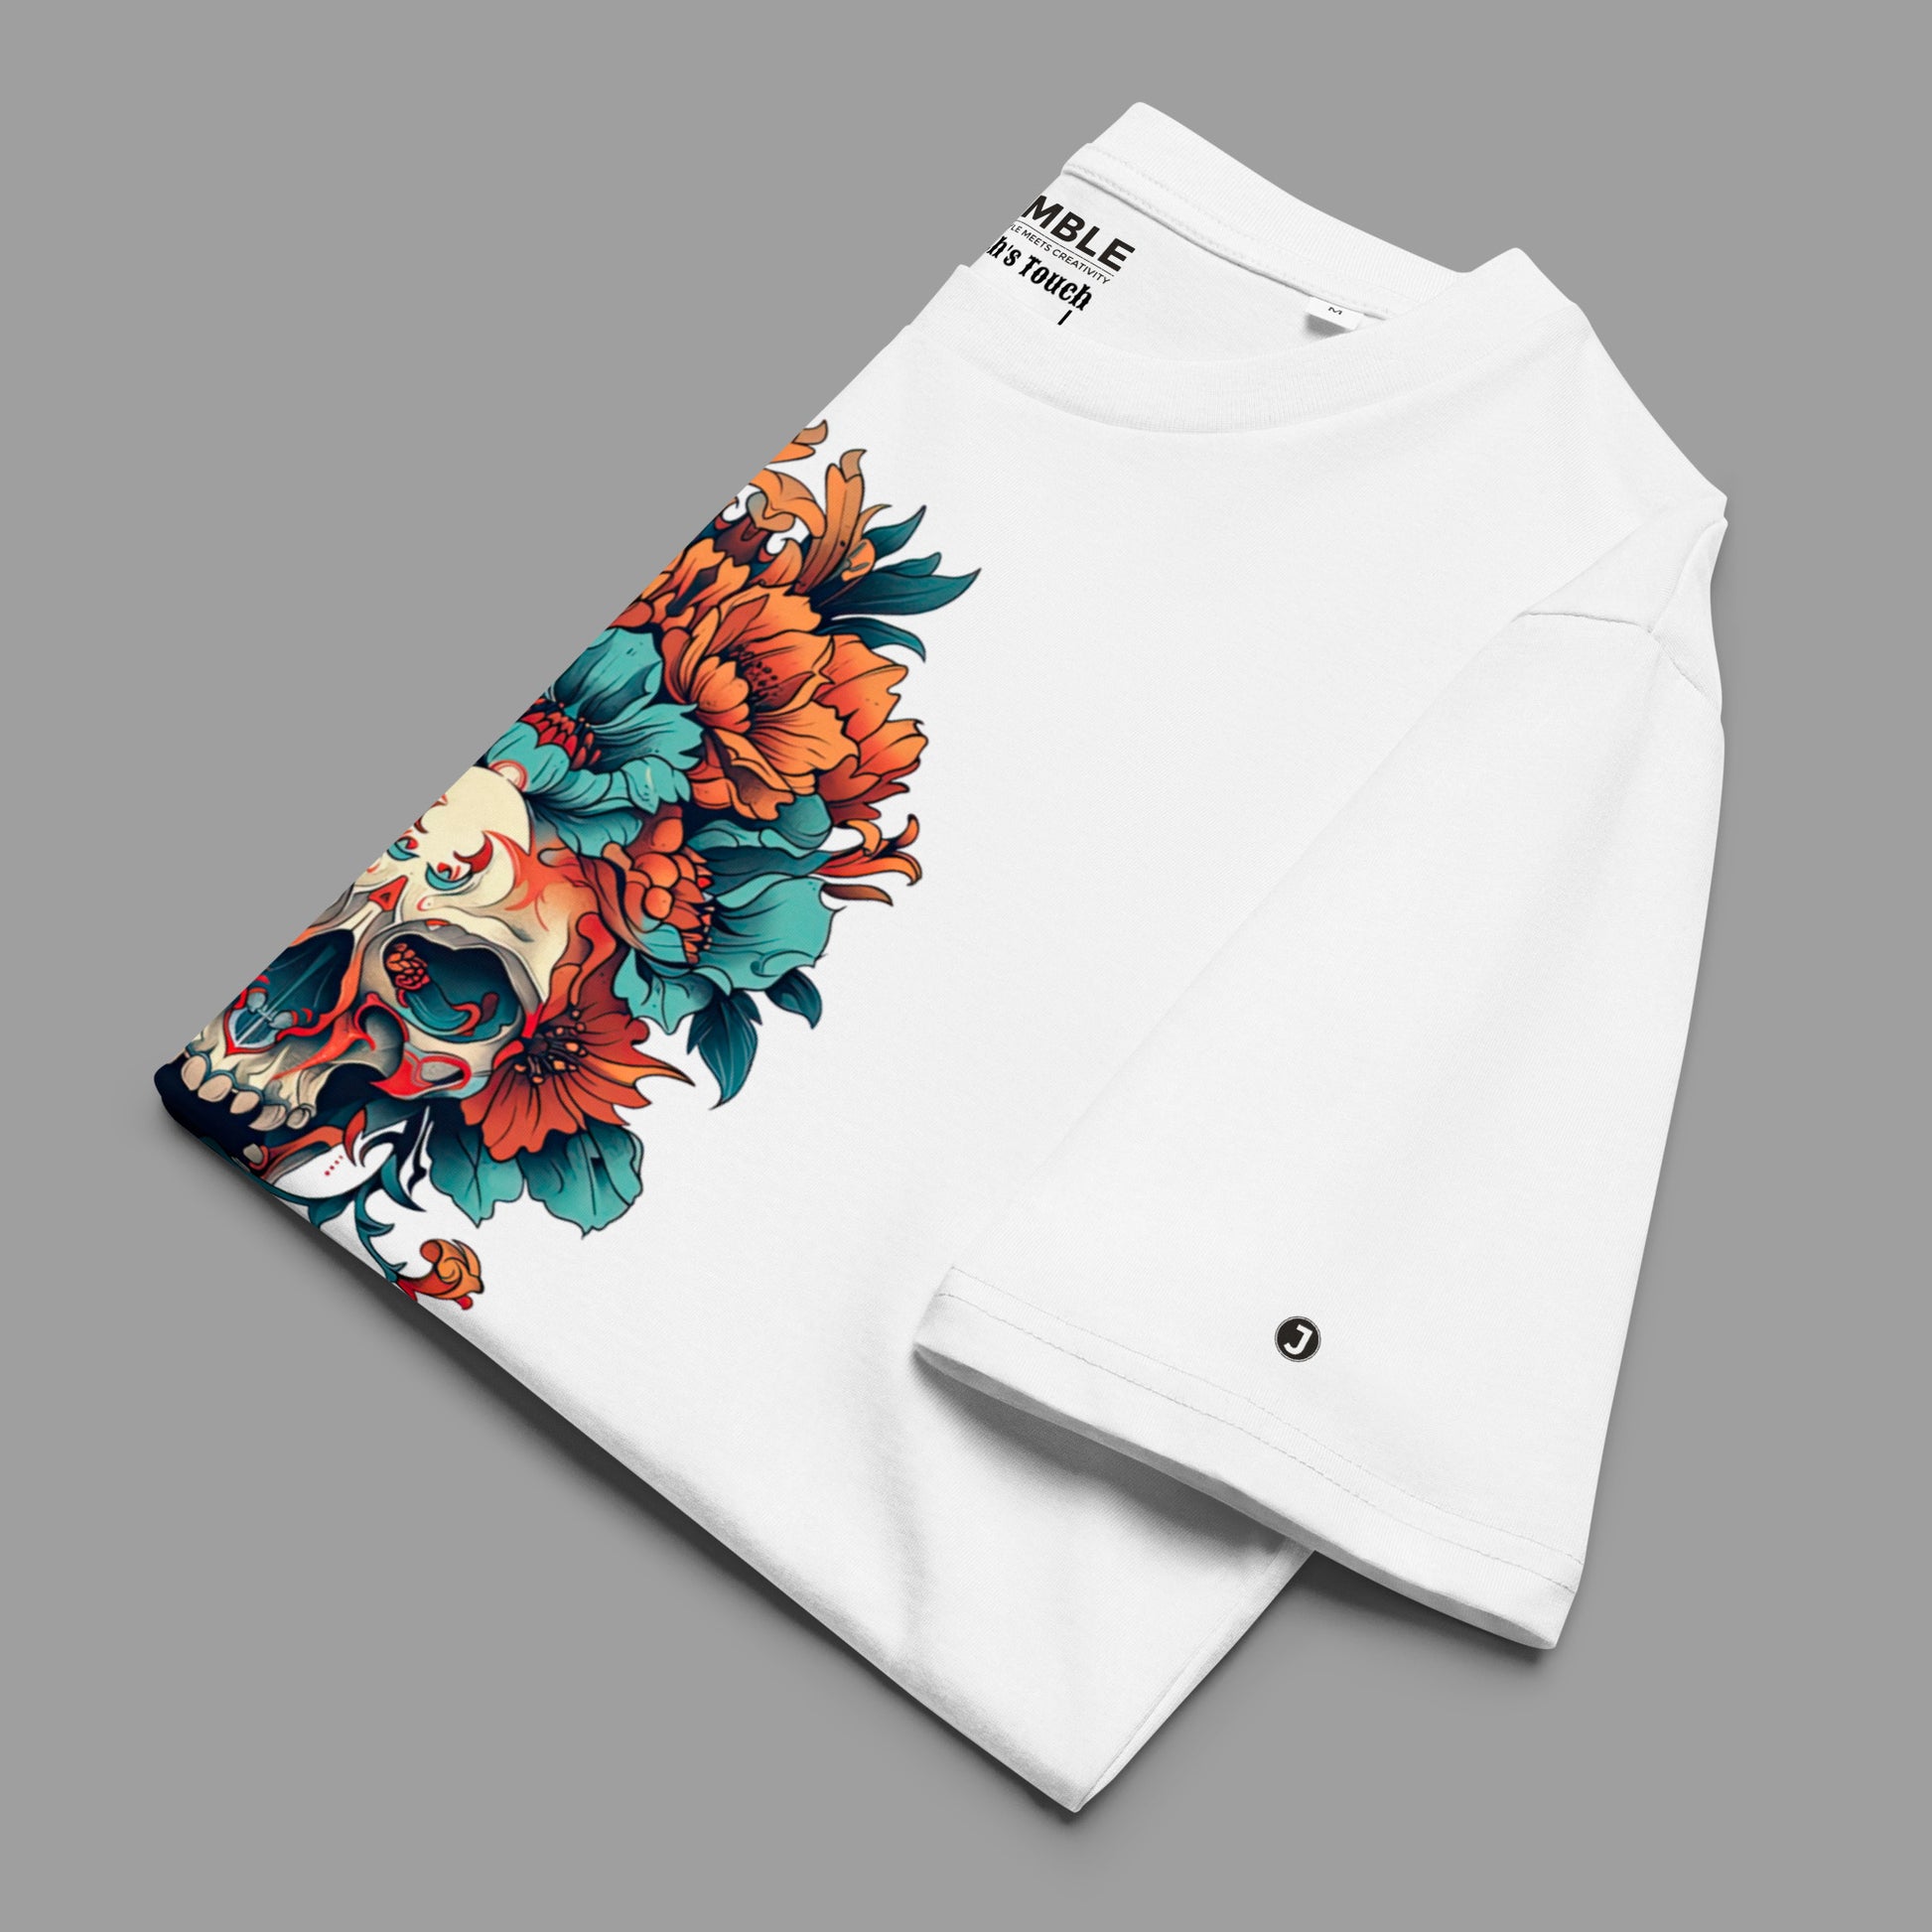 folded Death's Touch Premium Unisex organic cotton t-shirt